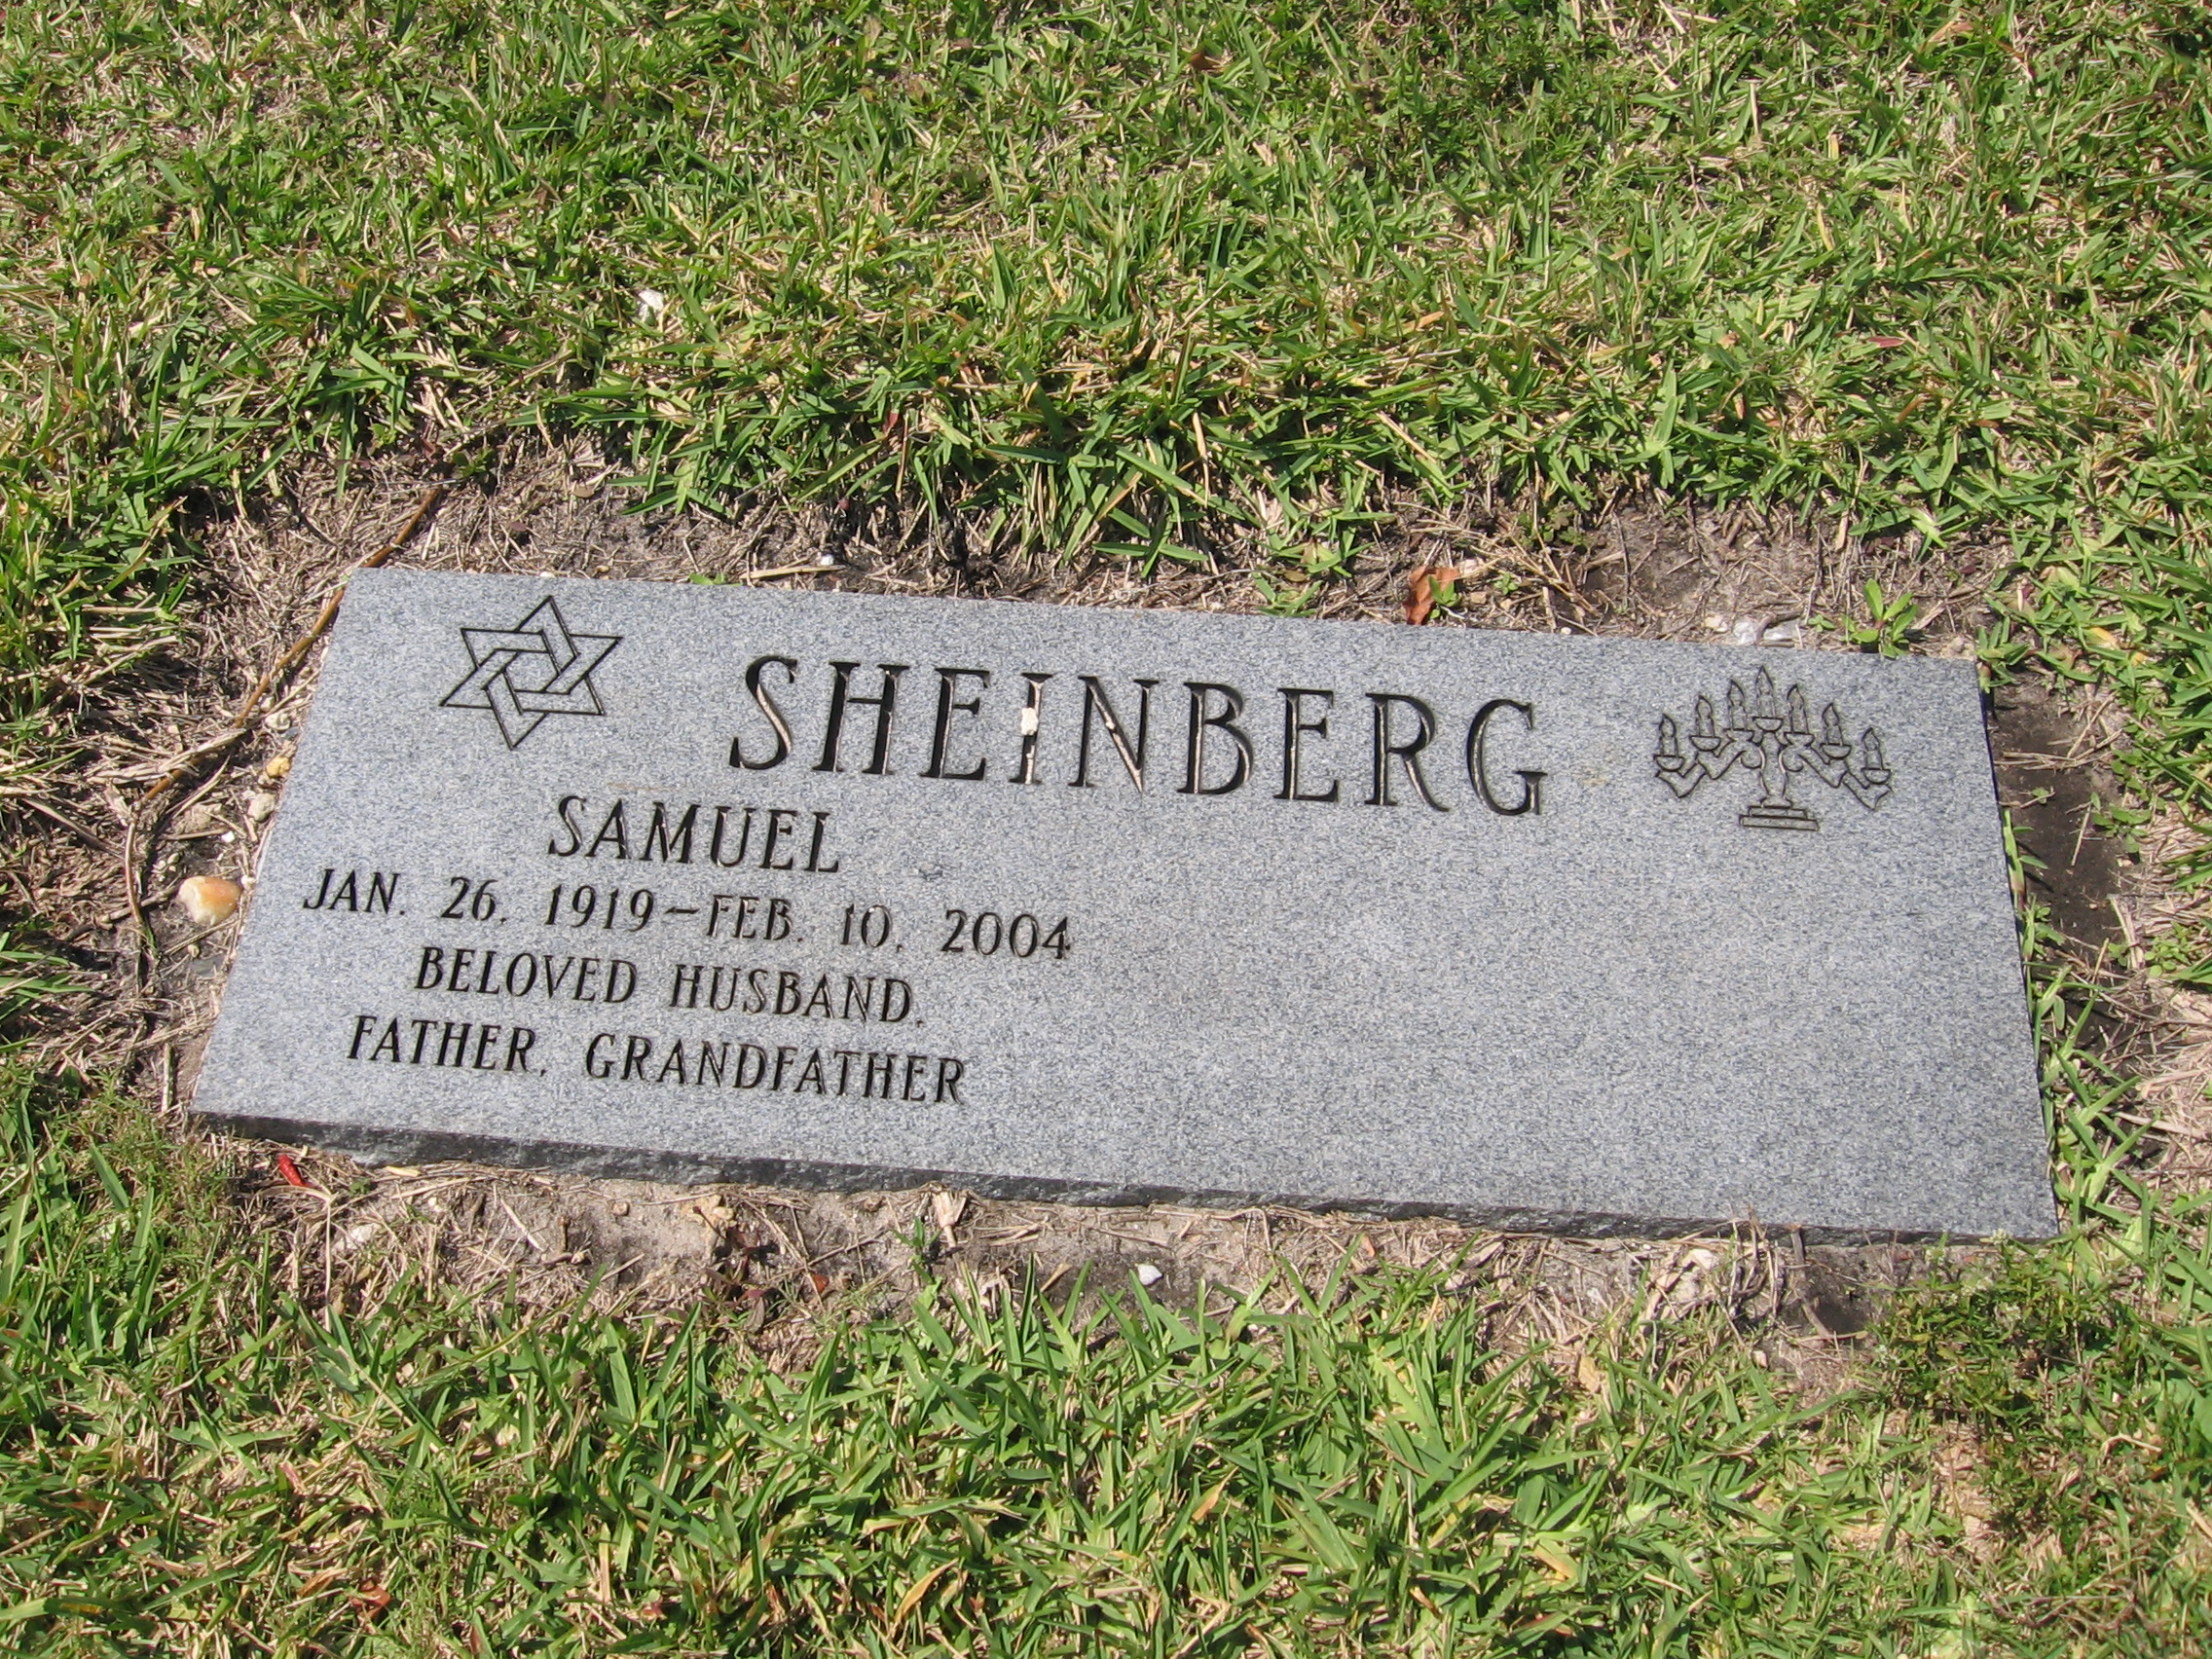 Samuel Sheinberg